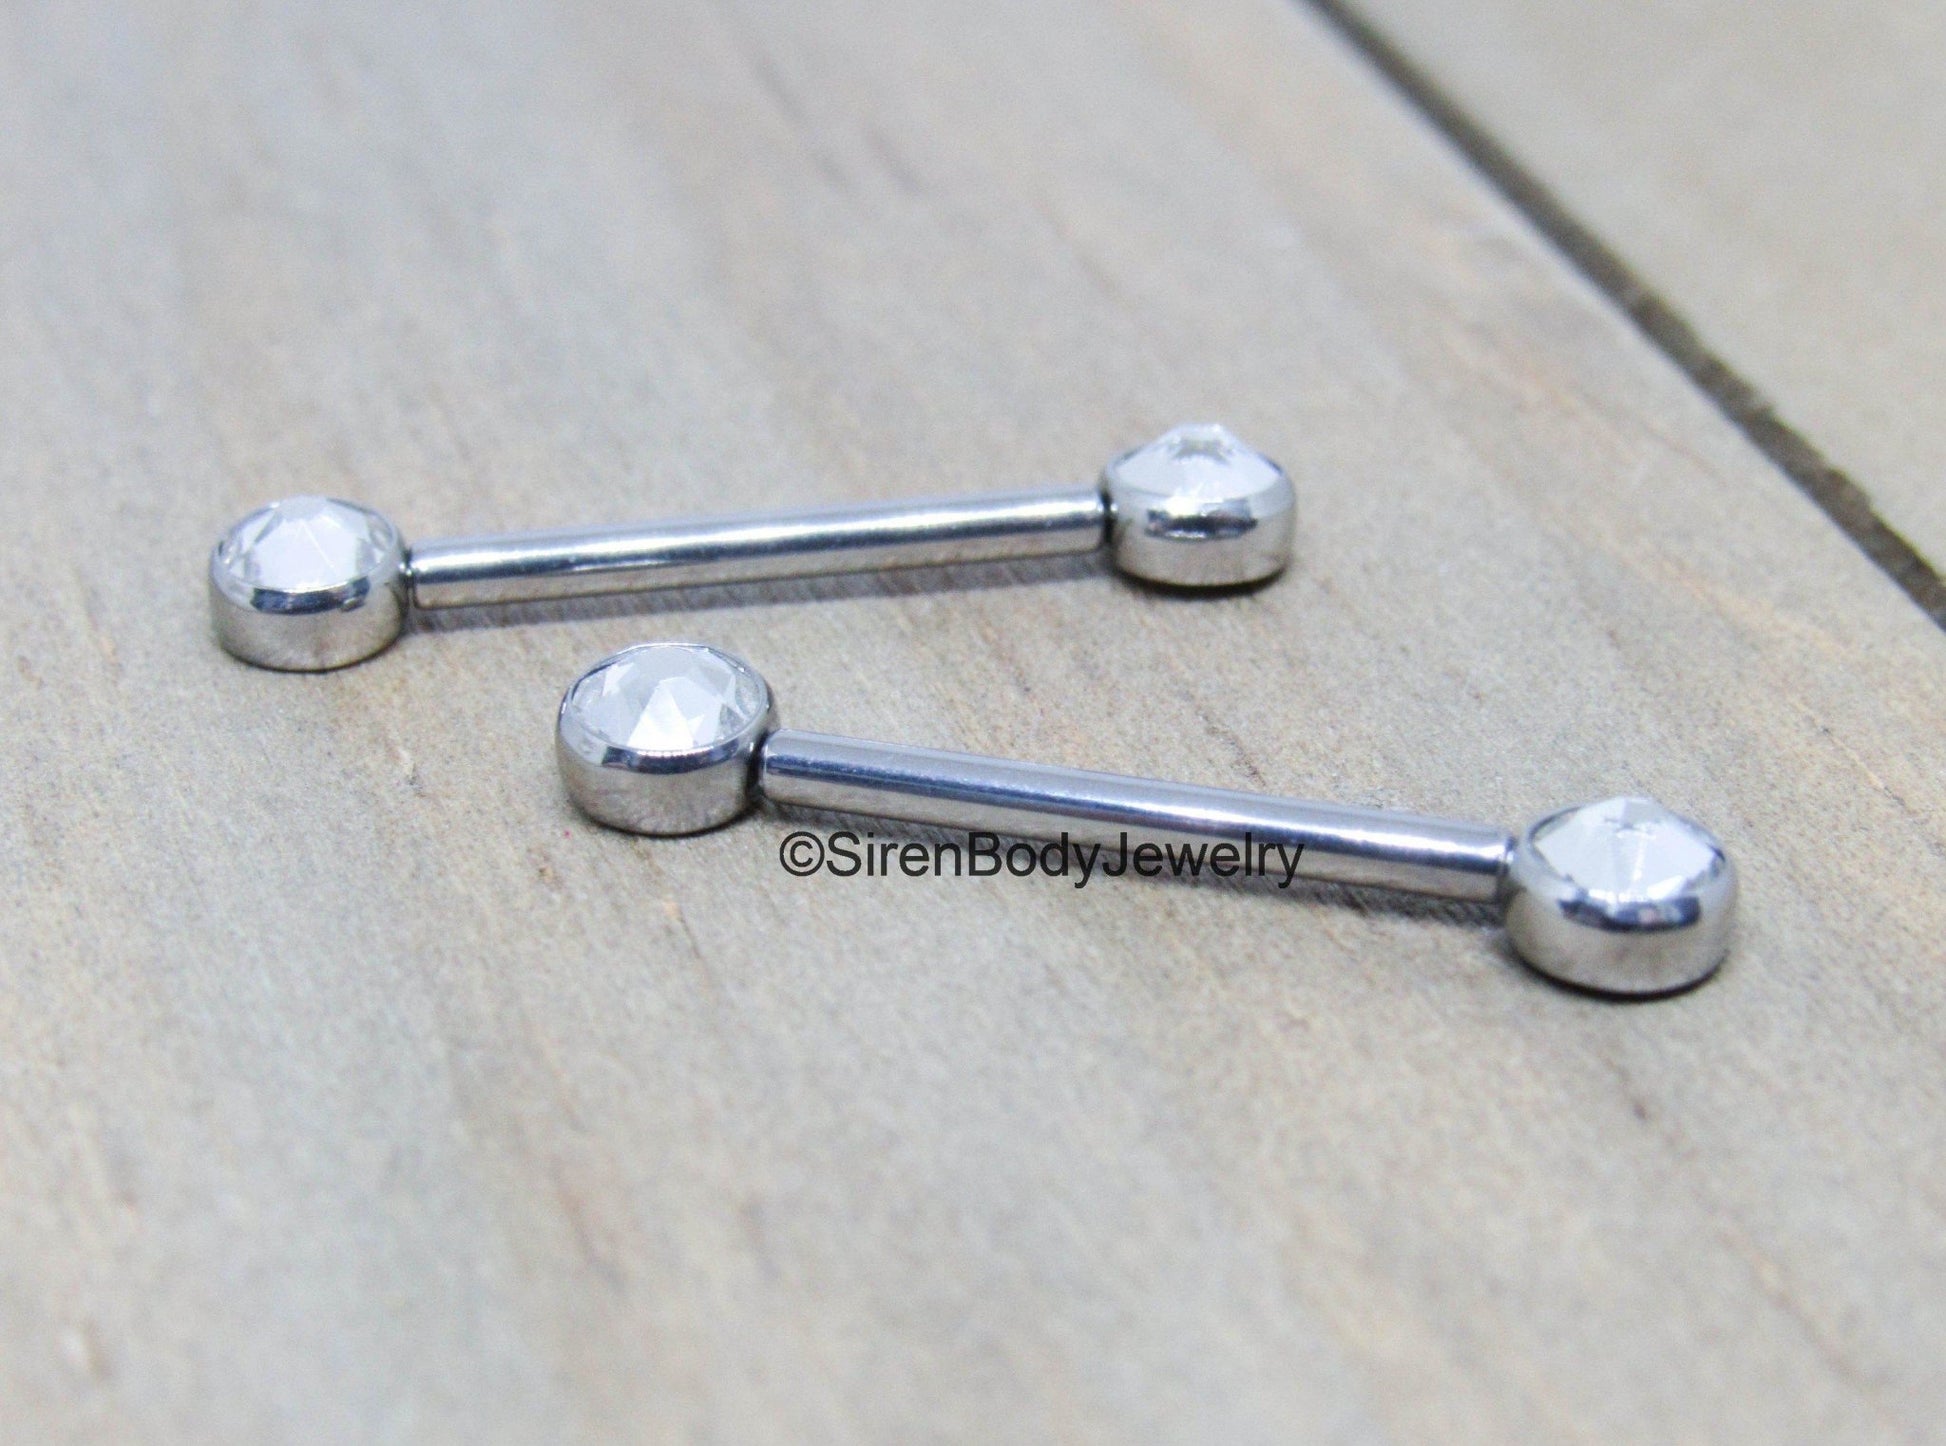 14g Titanium nipple piercing barbell set straight high polish silver  internally threaded body jewelry pair